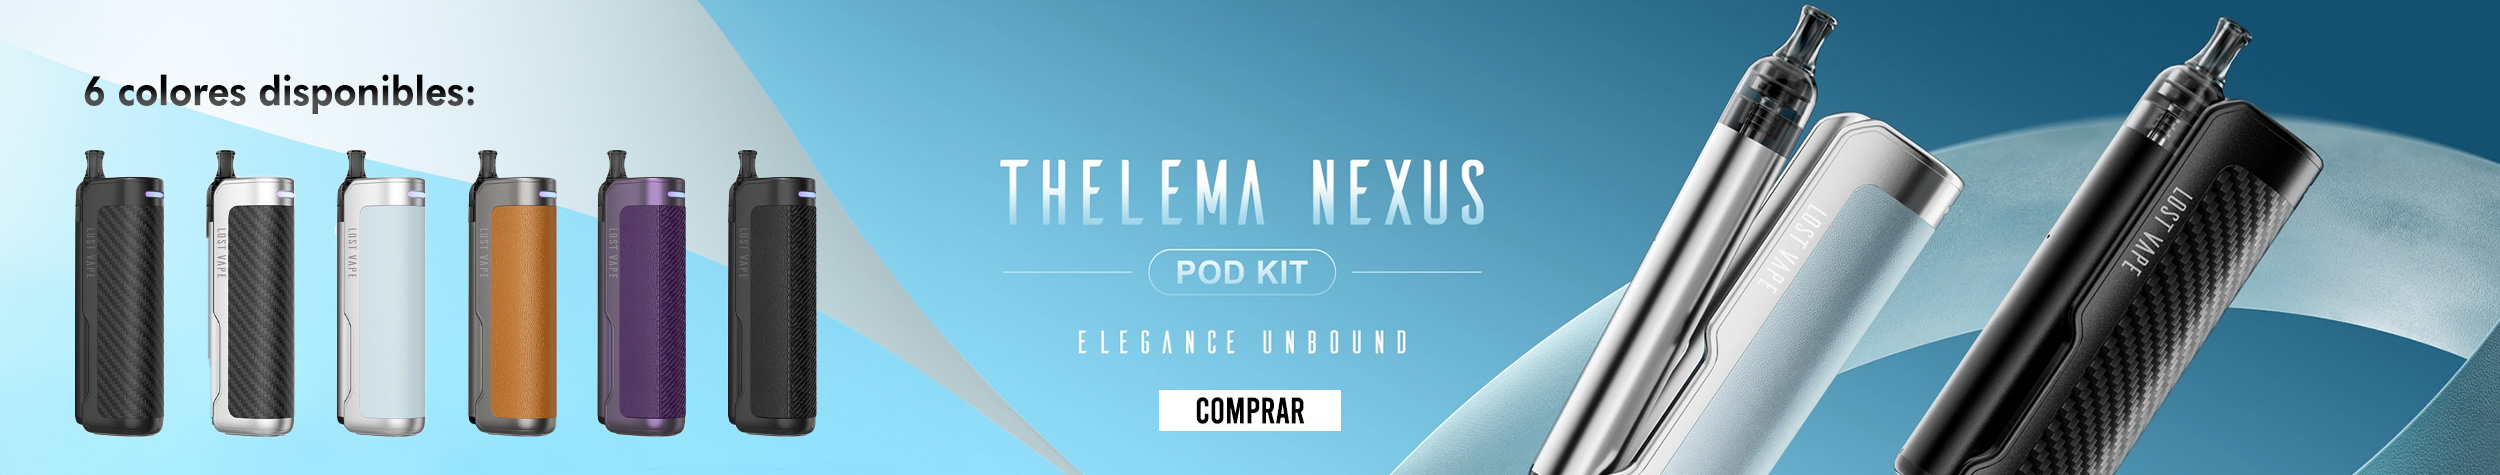 Thelema Nexus - Elegance